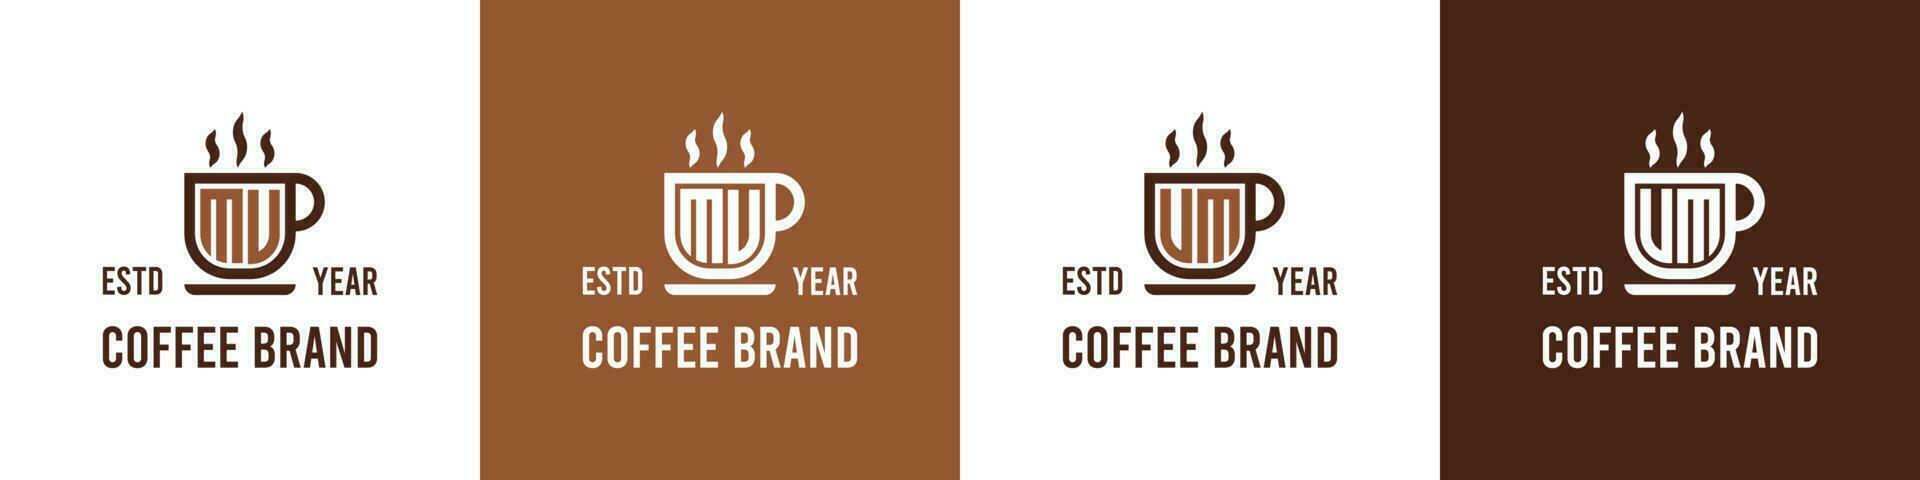 letra mu y um café logo, adecuado para ninguna negocio relacionado a café, té, o otro con mu o um iniciales. vector